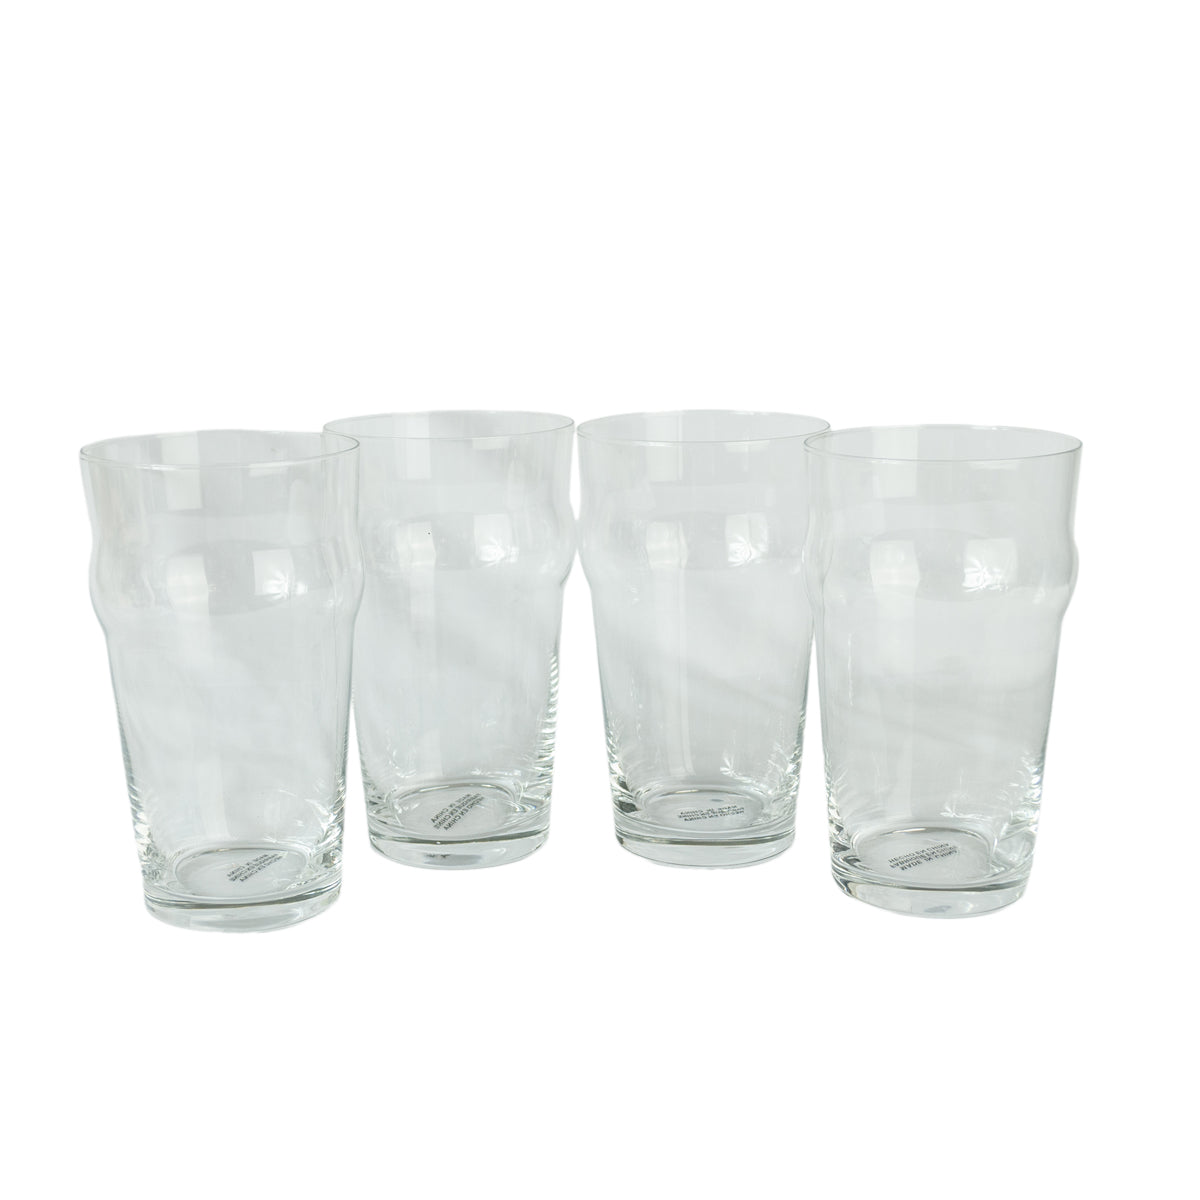 Set de 4 vasos de cristal de 36 cl, P4, pack, juego de vasos para agua,  bebidas, cerveza, licores, 8,9 x 8,5 cm, lig